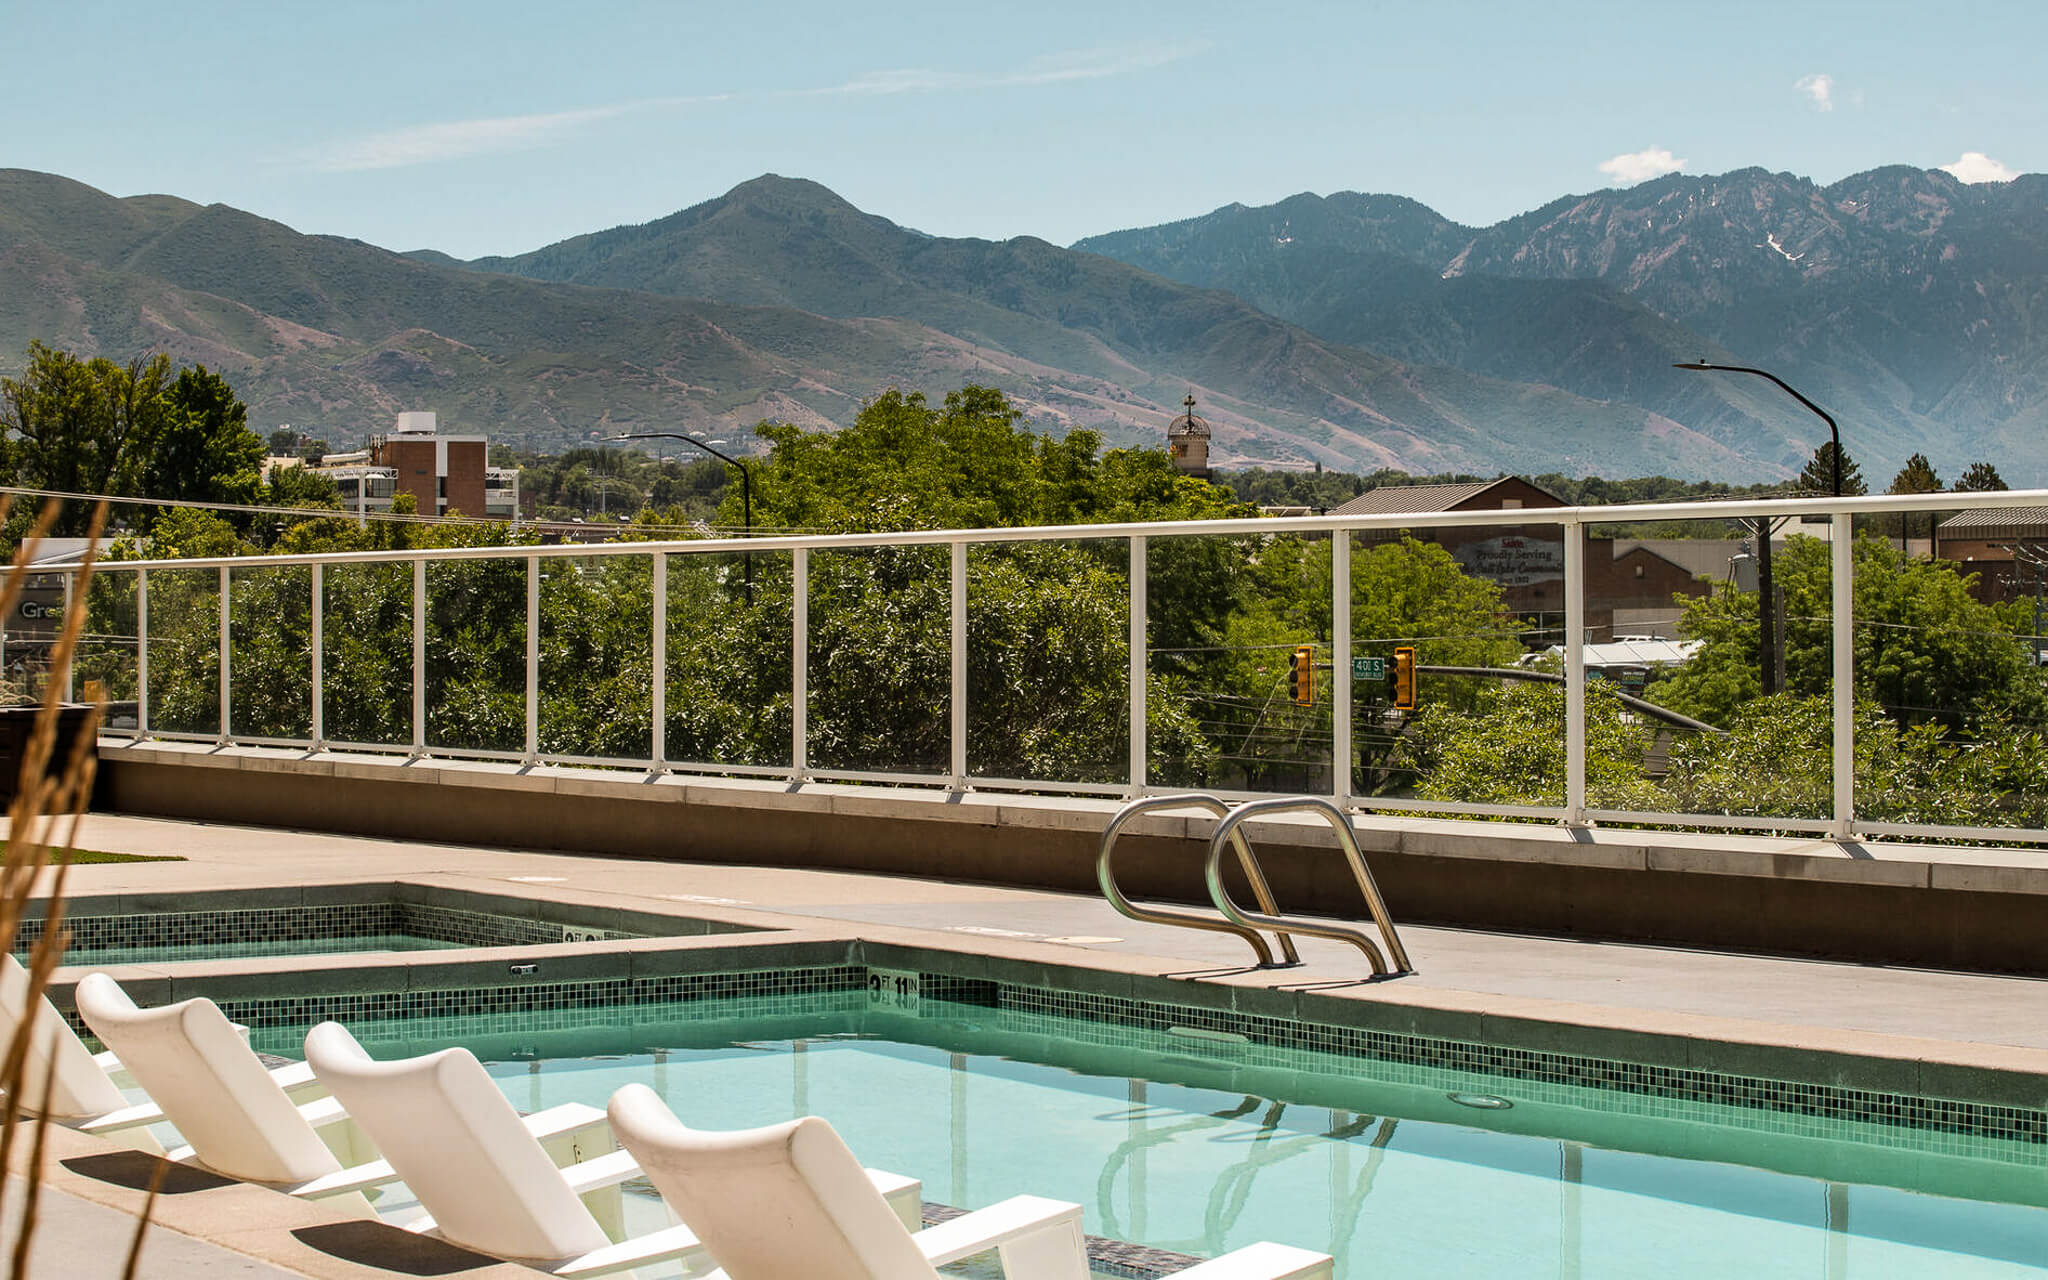 Paragon Corporate Housing - Encore Apartments - Salt Lake City Utah